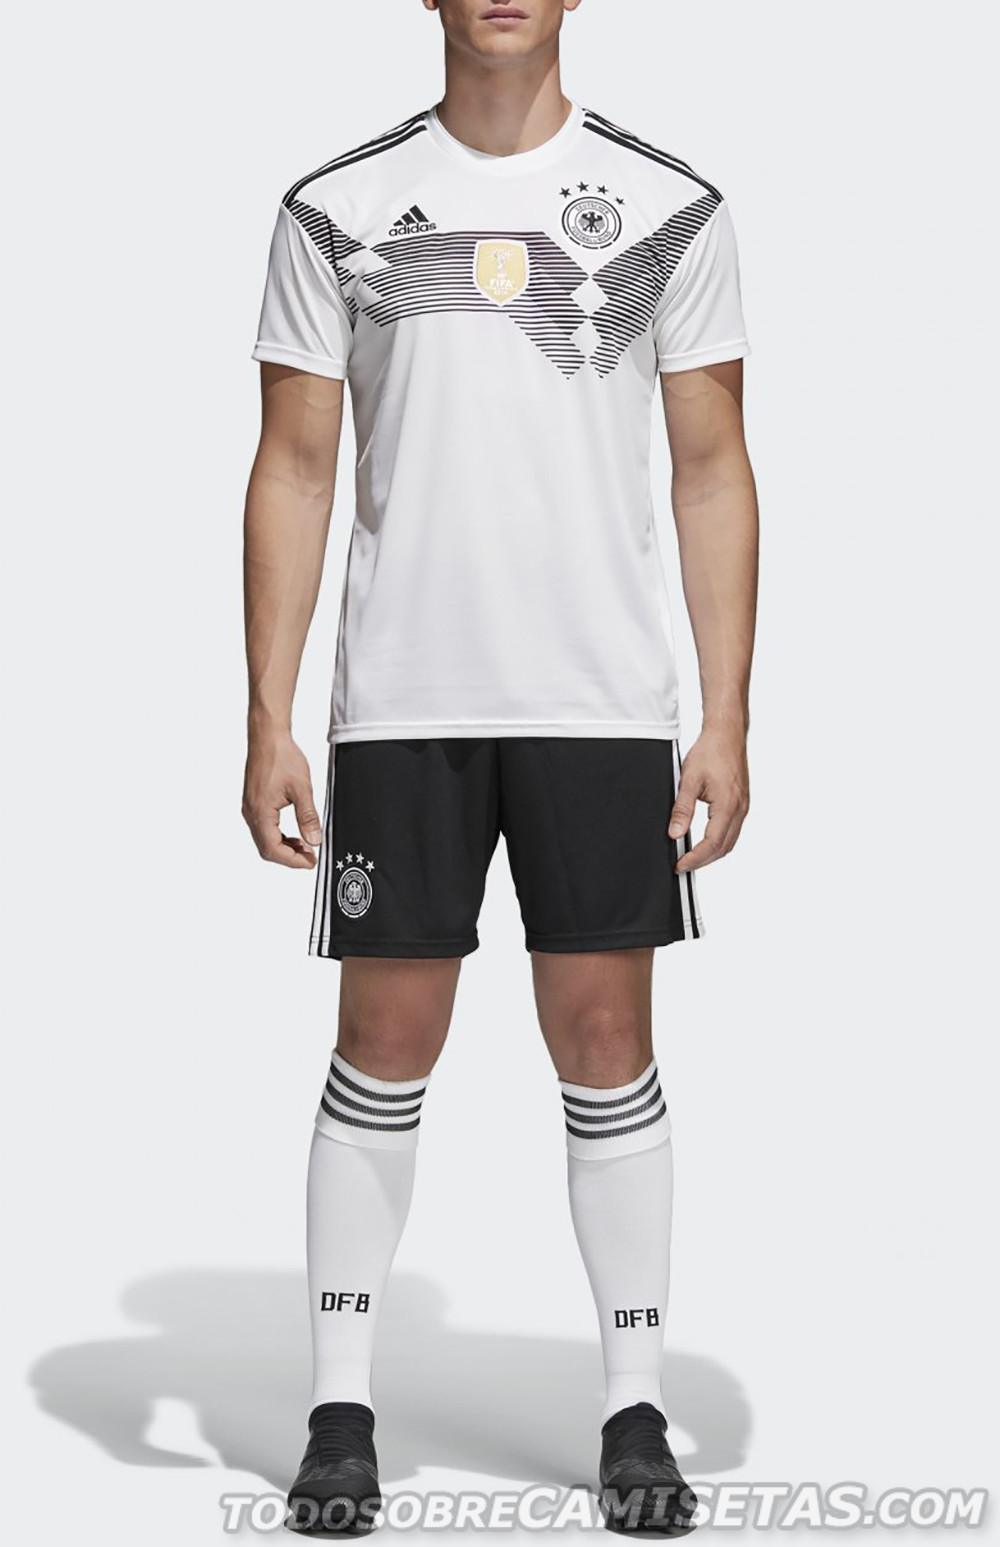 Germany 2018 World Cup adidas Kit